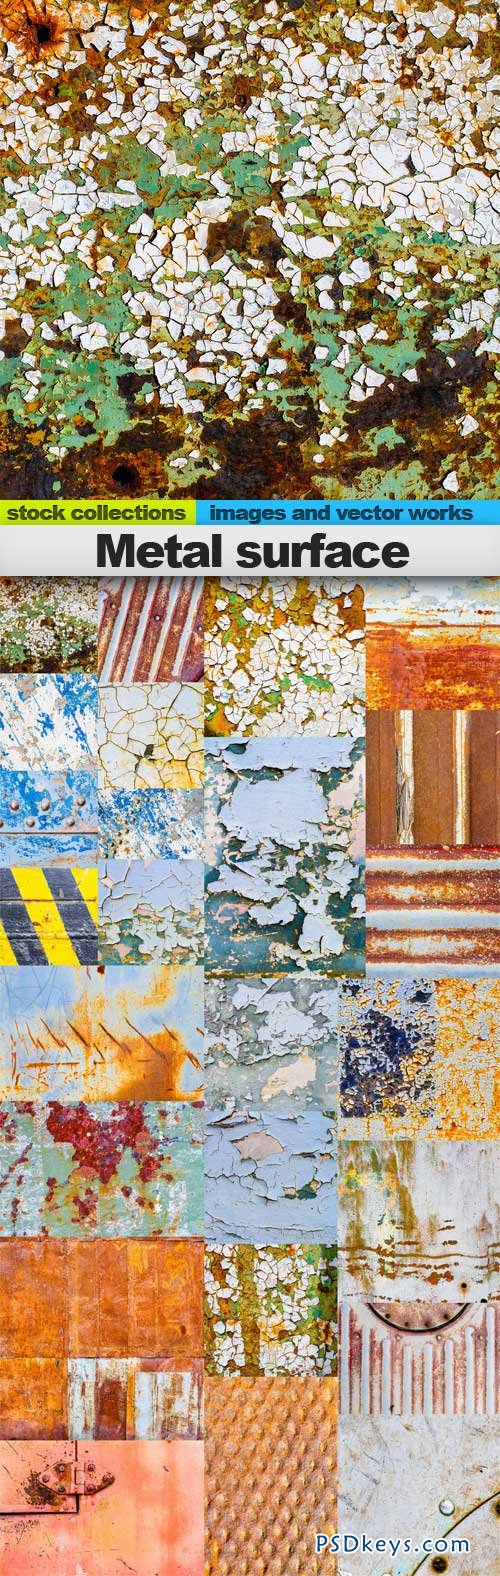 Metal surface 25xUHQ JPEG